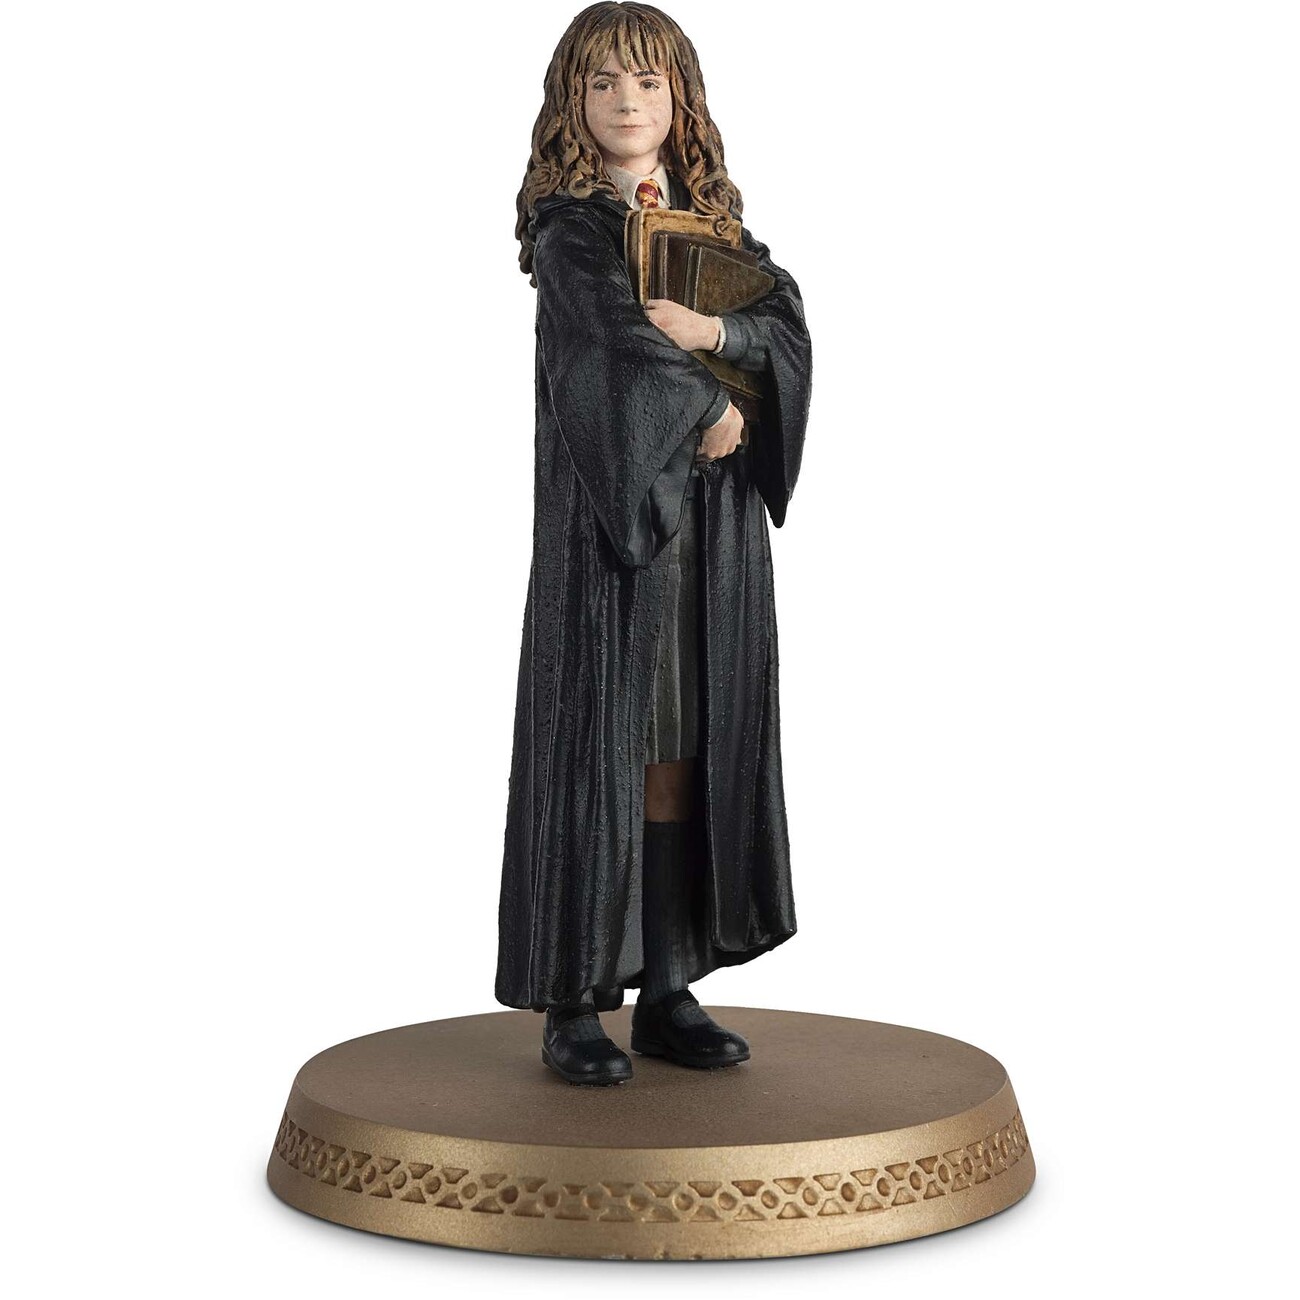 Figurine Harry Potter - Hermione Granger | Tips for original gifts